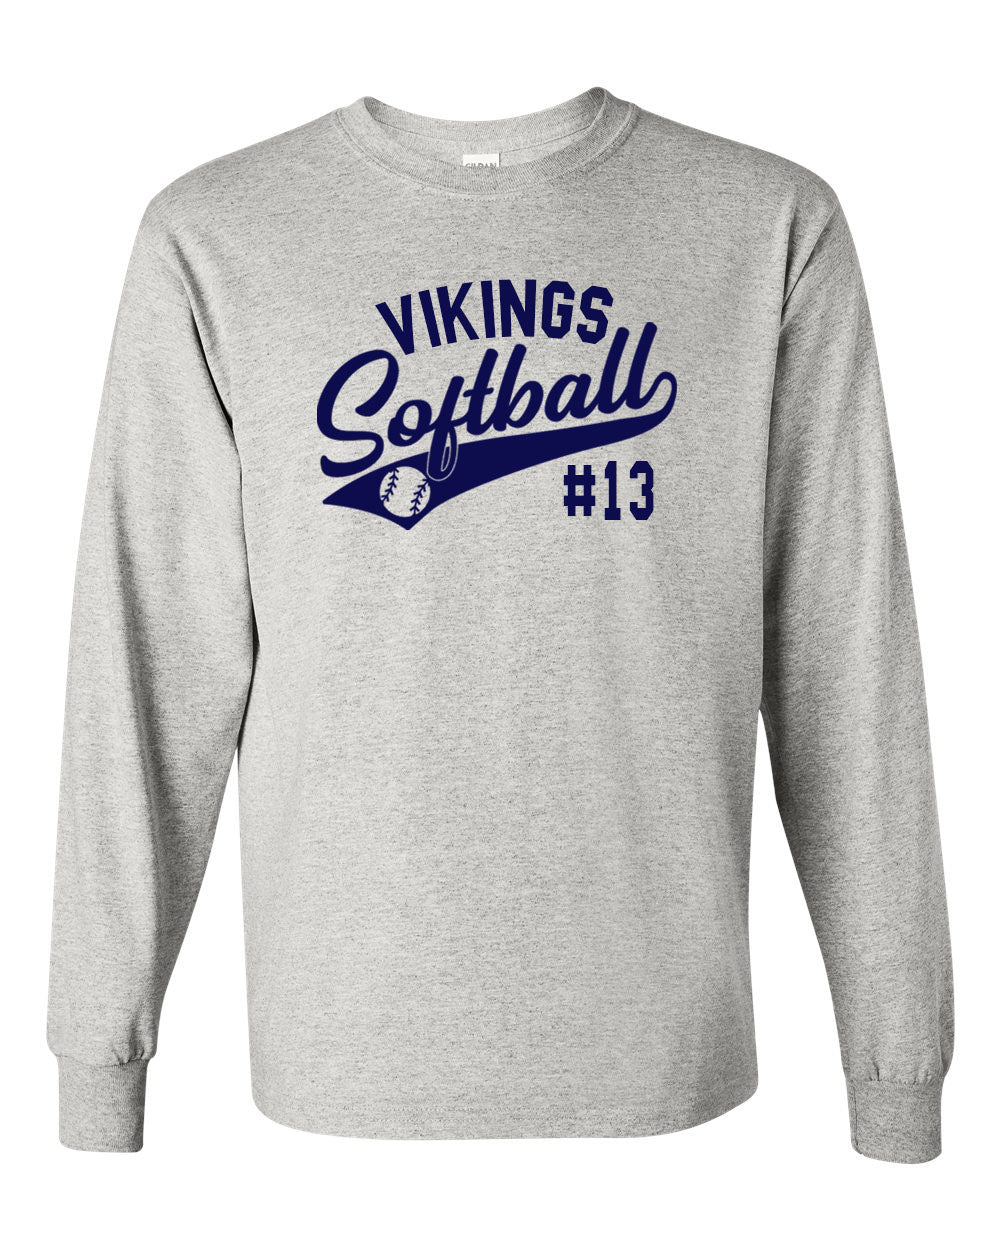 Vikings Softball Long Sleeve Shirt